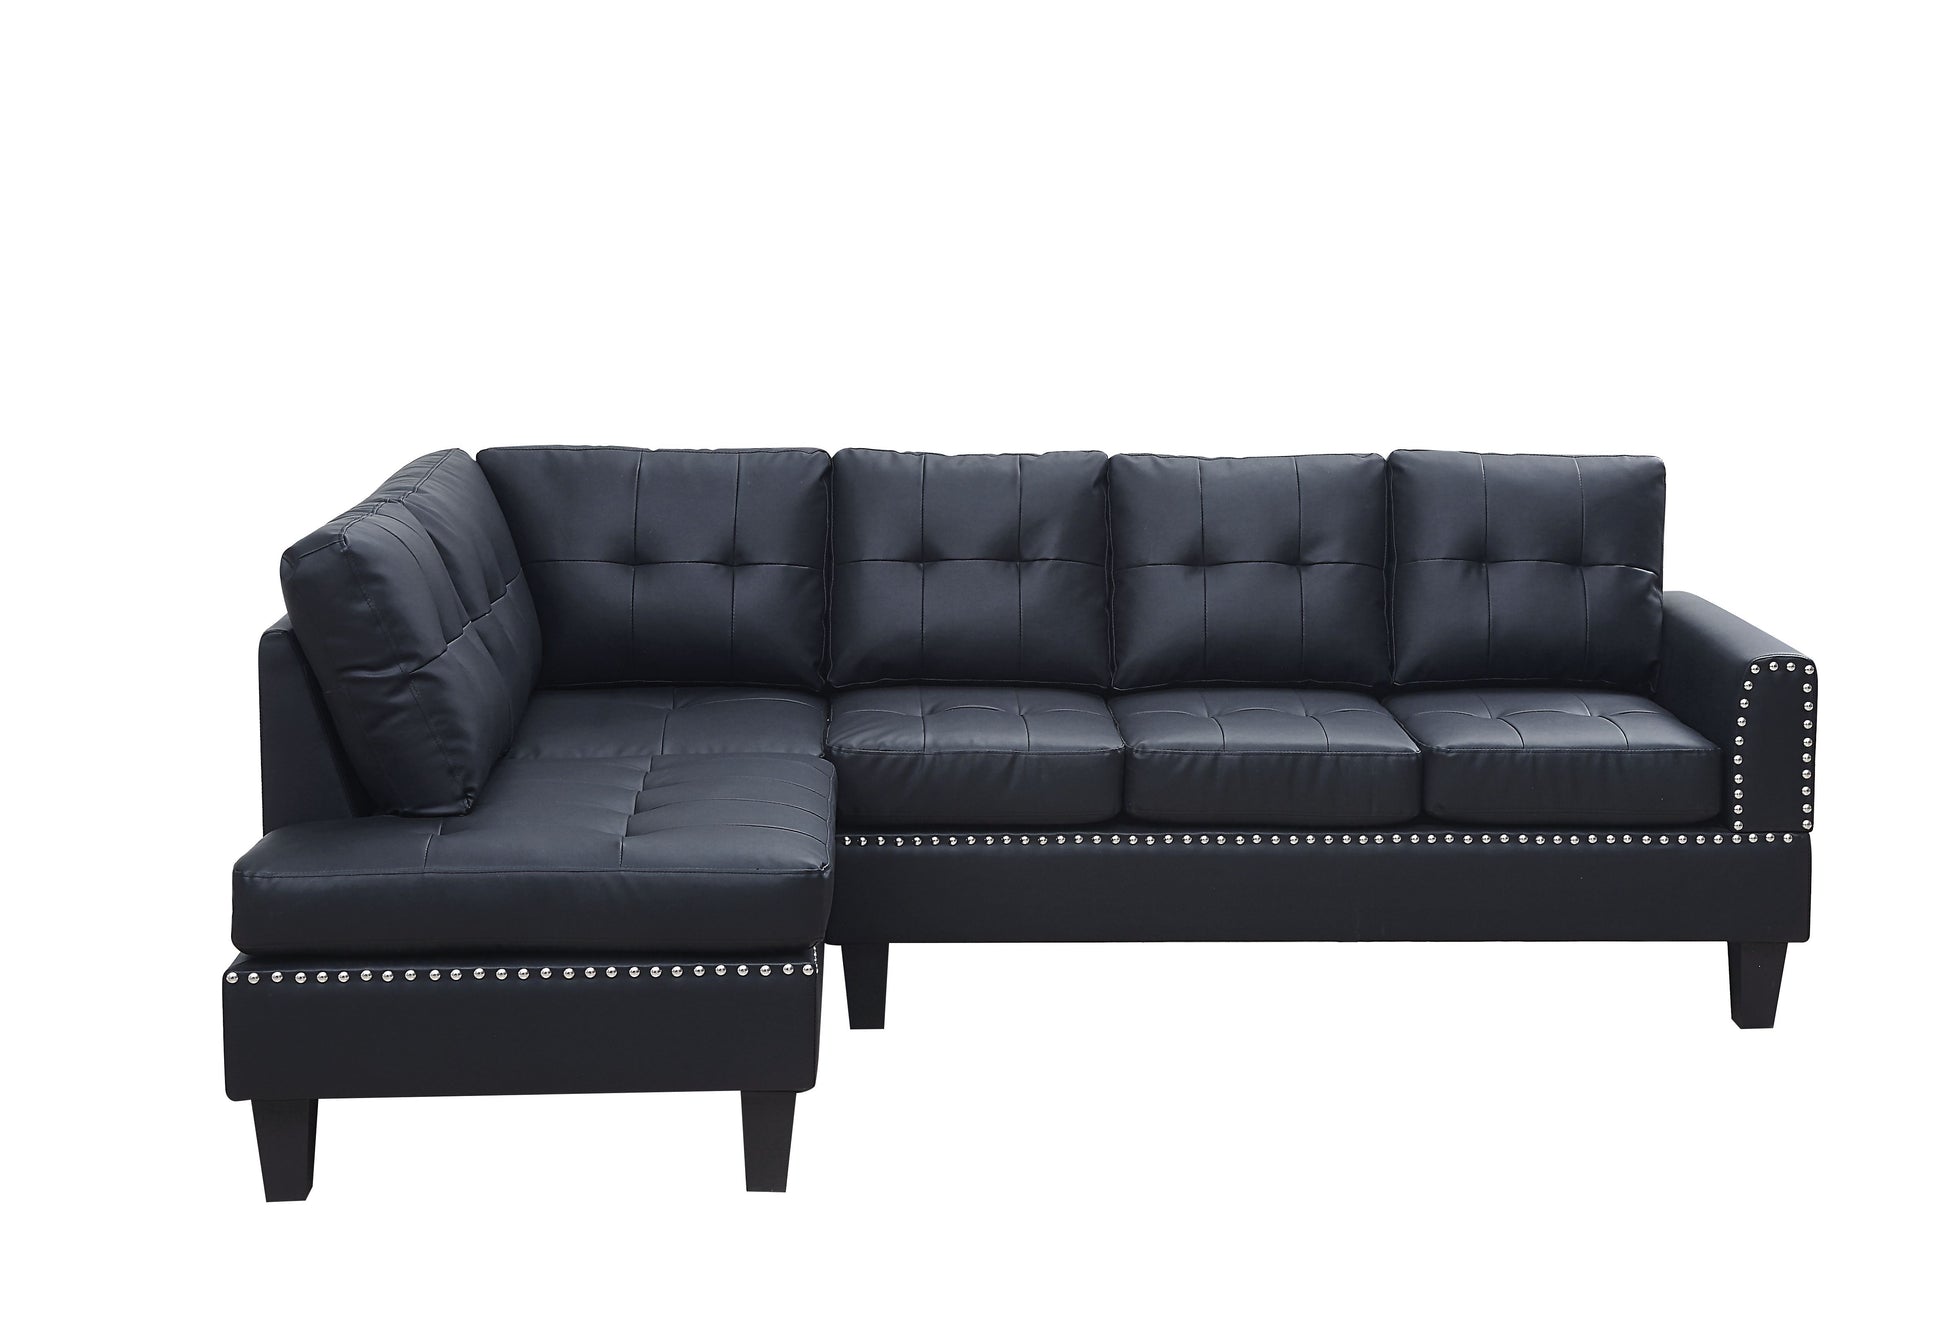 Jeimmur Sectional Sofa Black - Demine Essentials